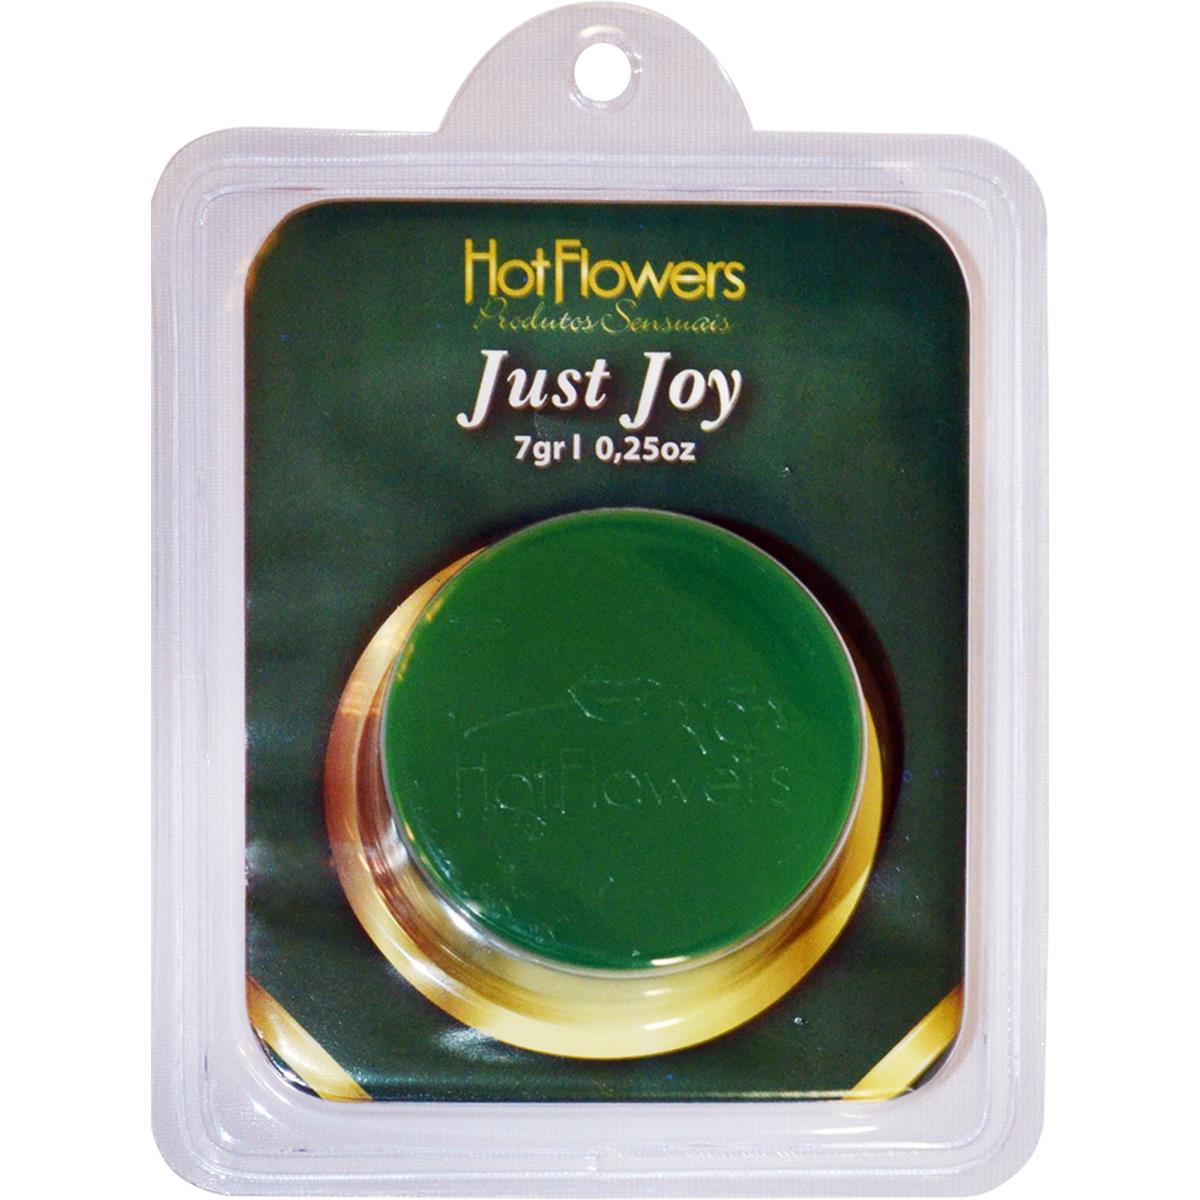 Just Joy 7g Hot Flowers - Miess